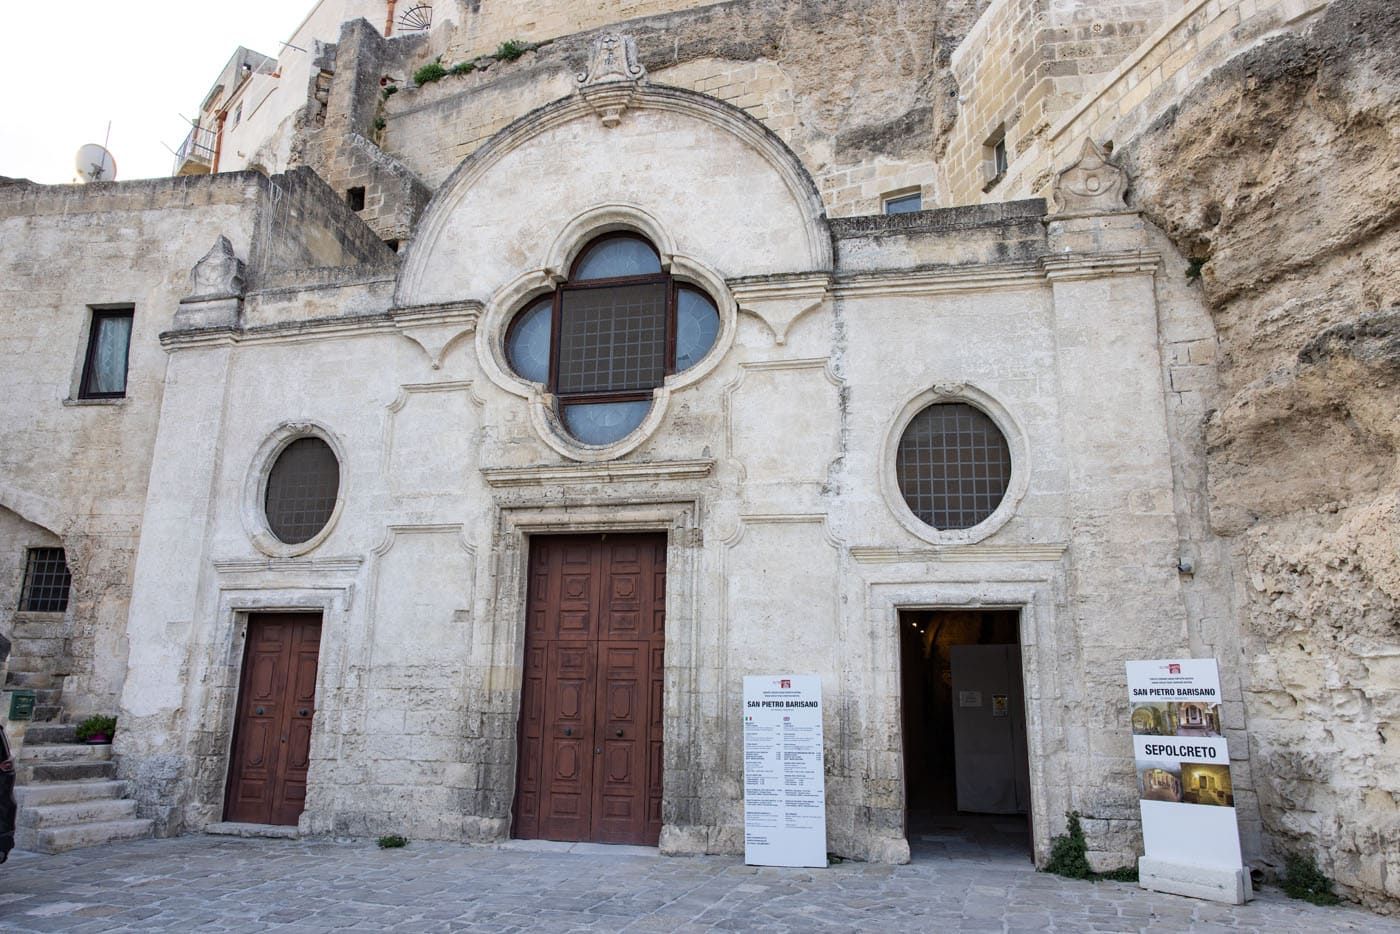 Church of Saint Peter Barisano